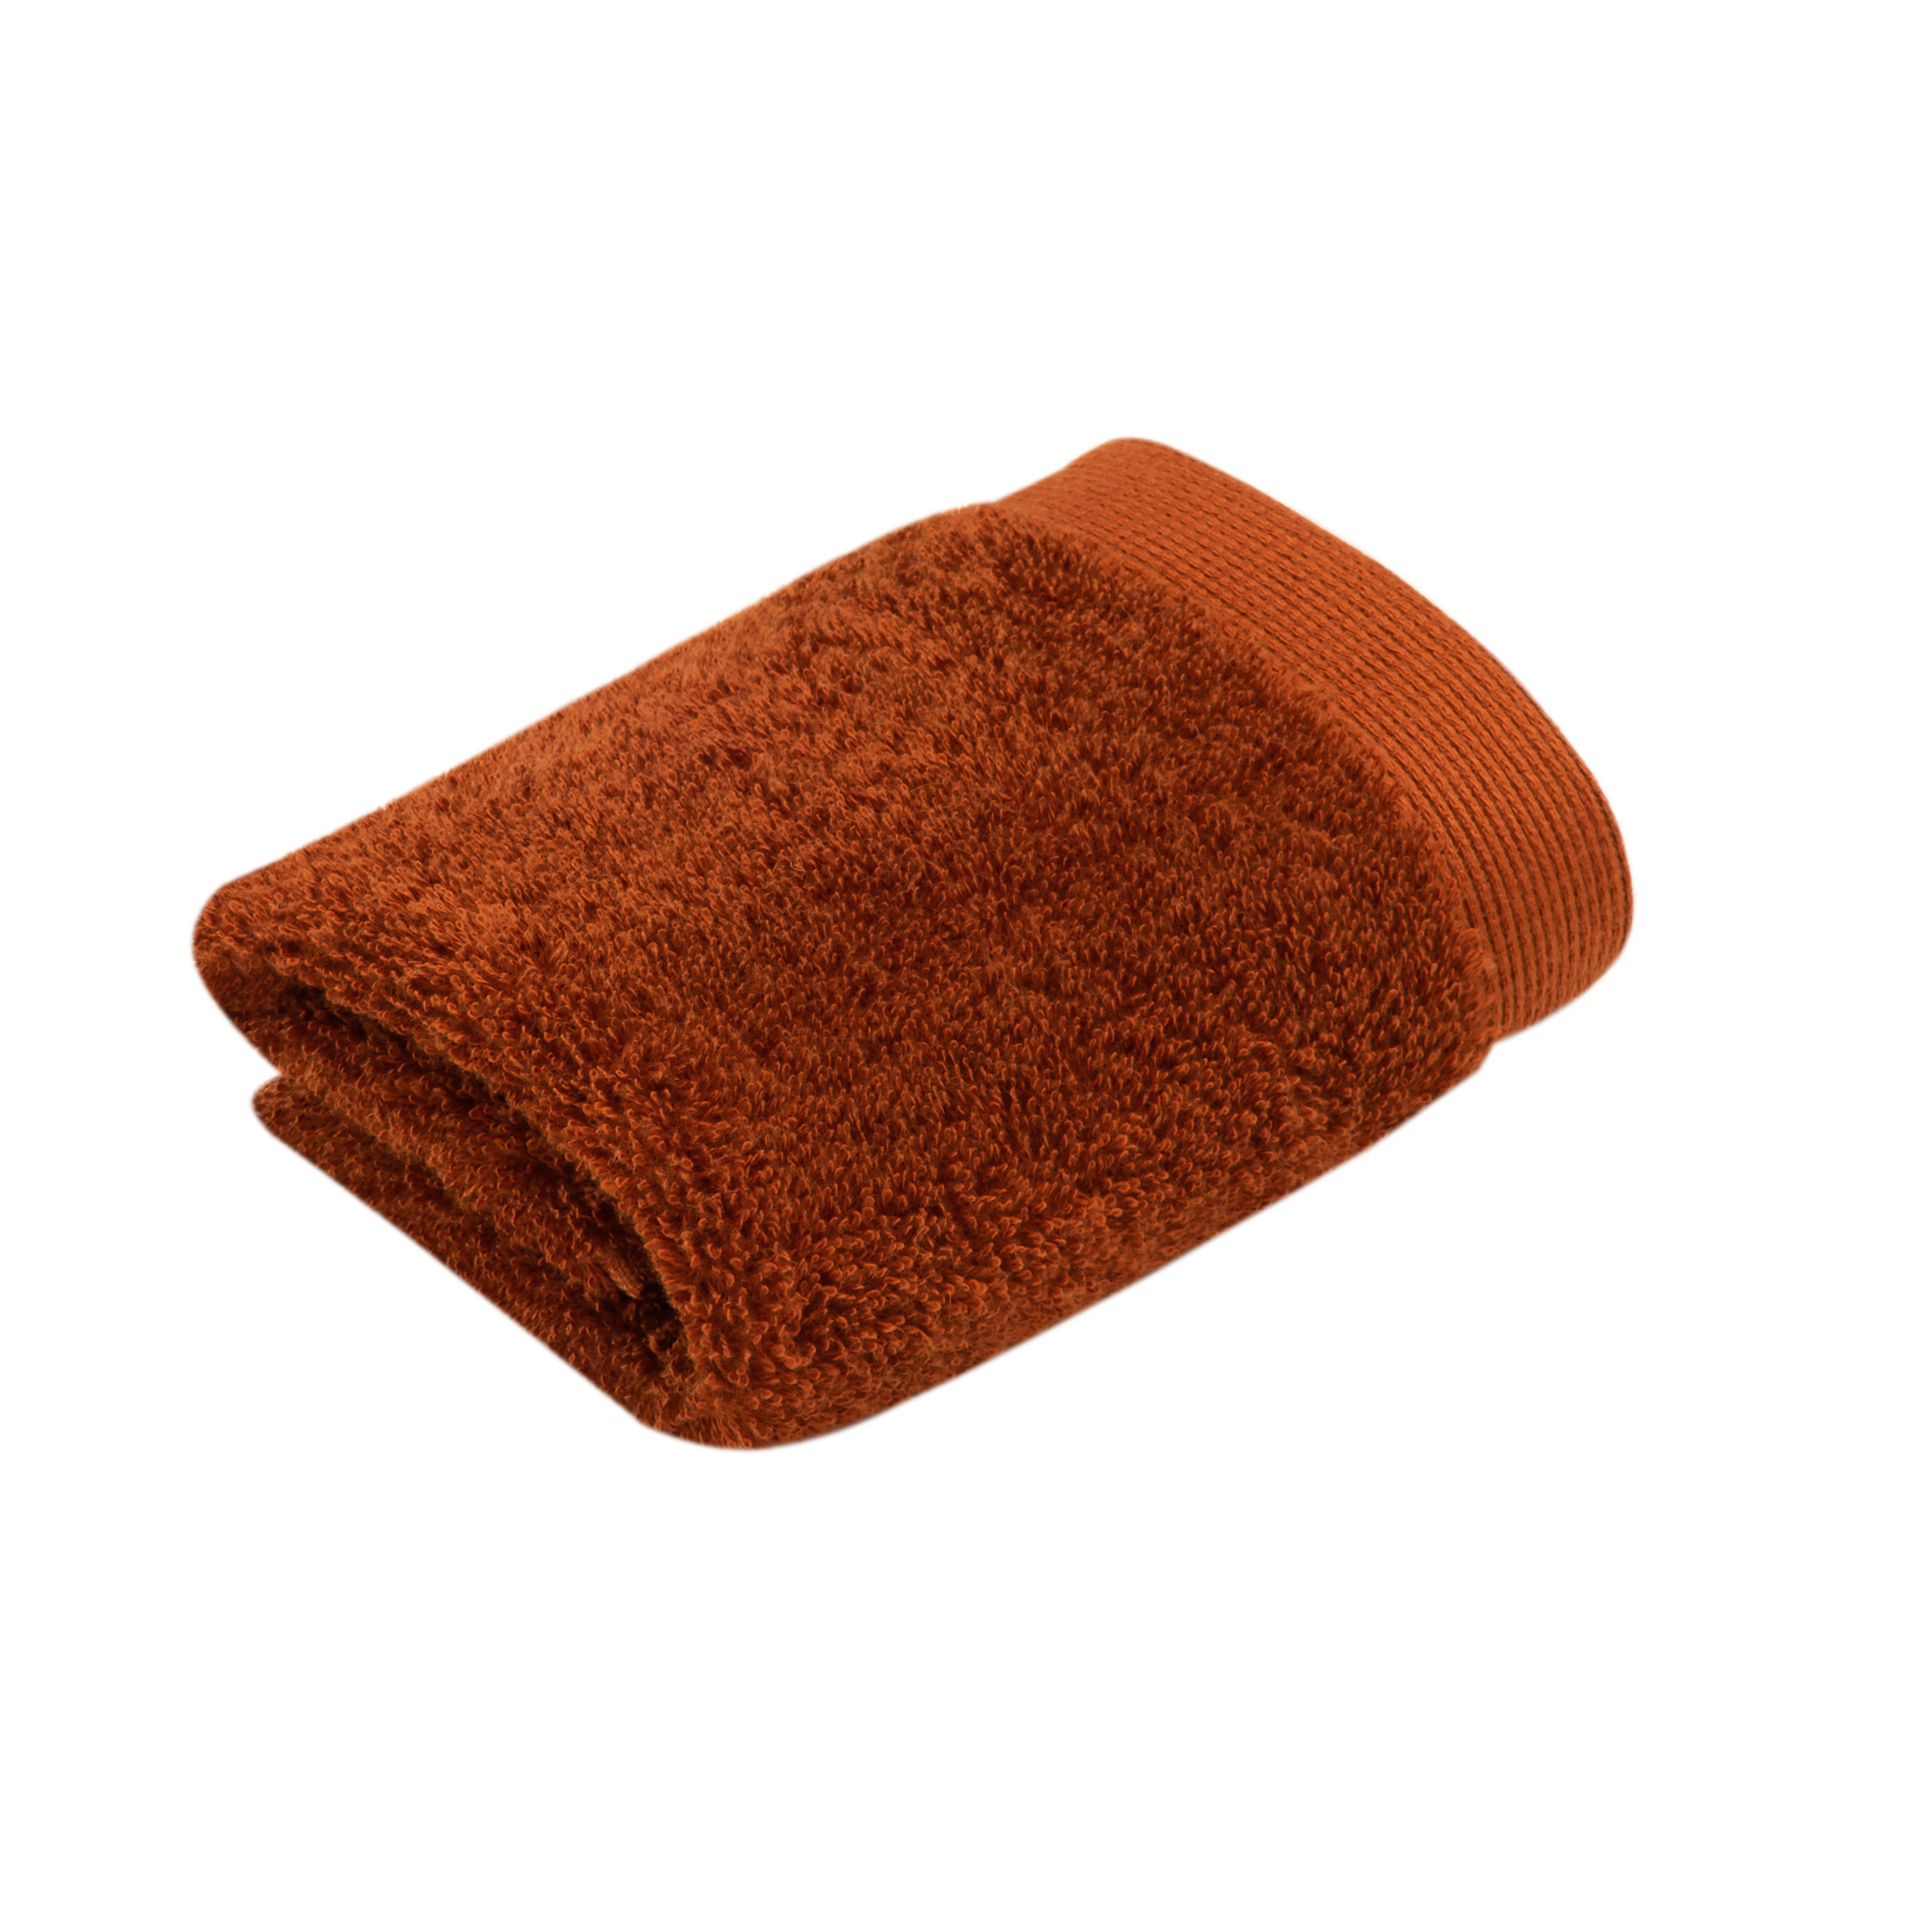 SEIFTUCH 30/30 cm Orange, Rotbraun  - Rotbraun/Orange, Basics, Textil (30/30cm) - Vossen